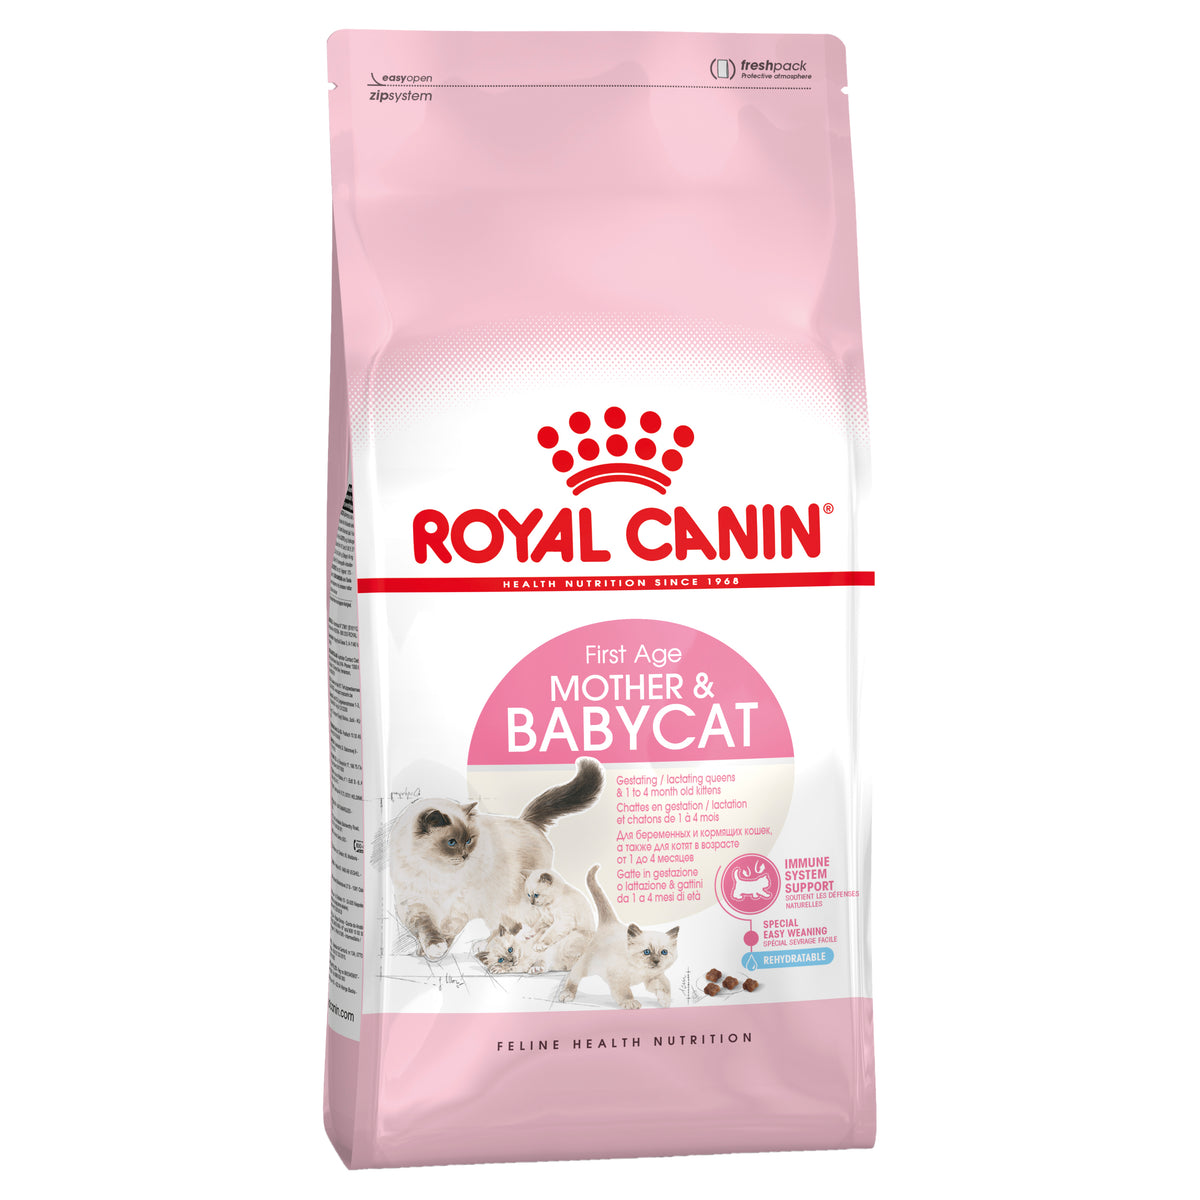 Royal Canin Baby Cat